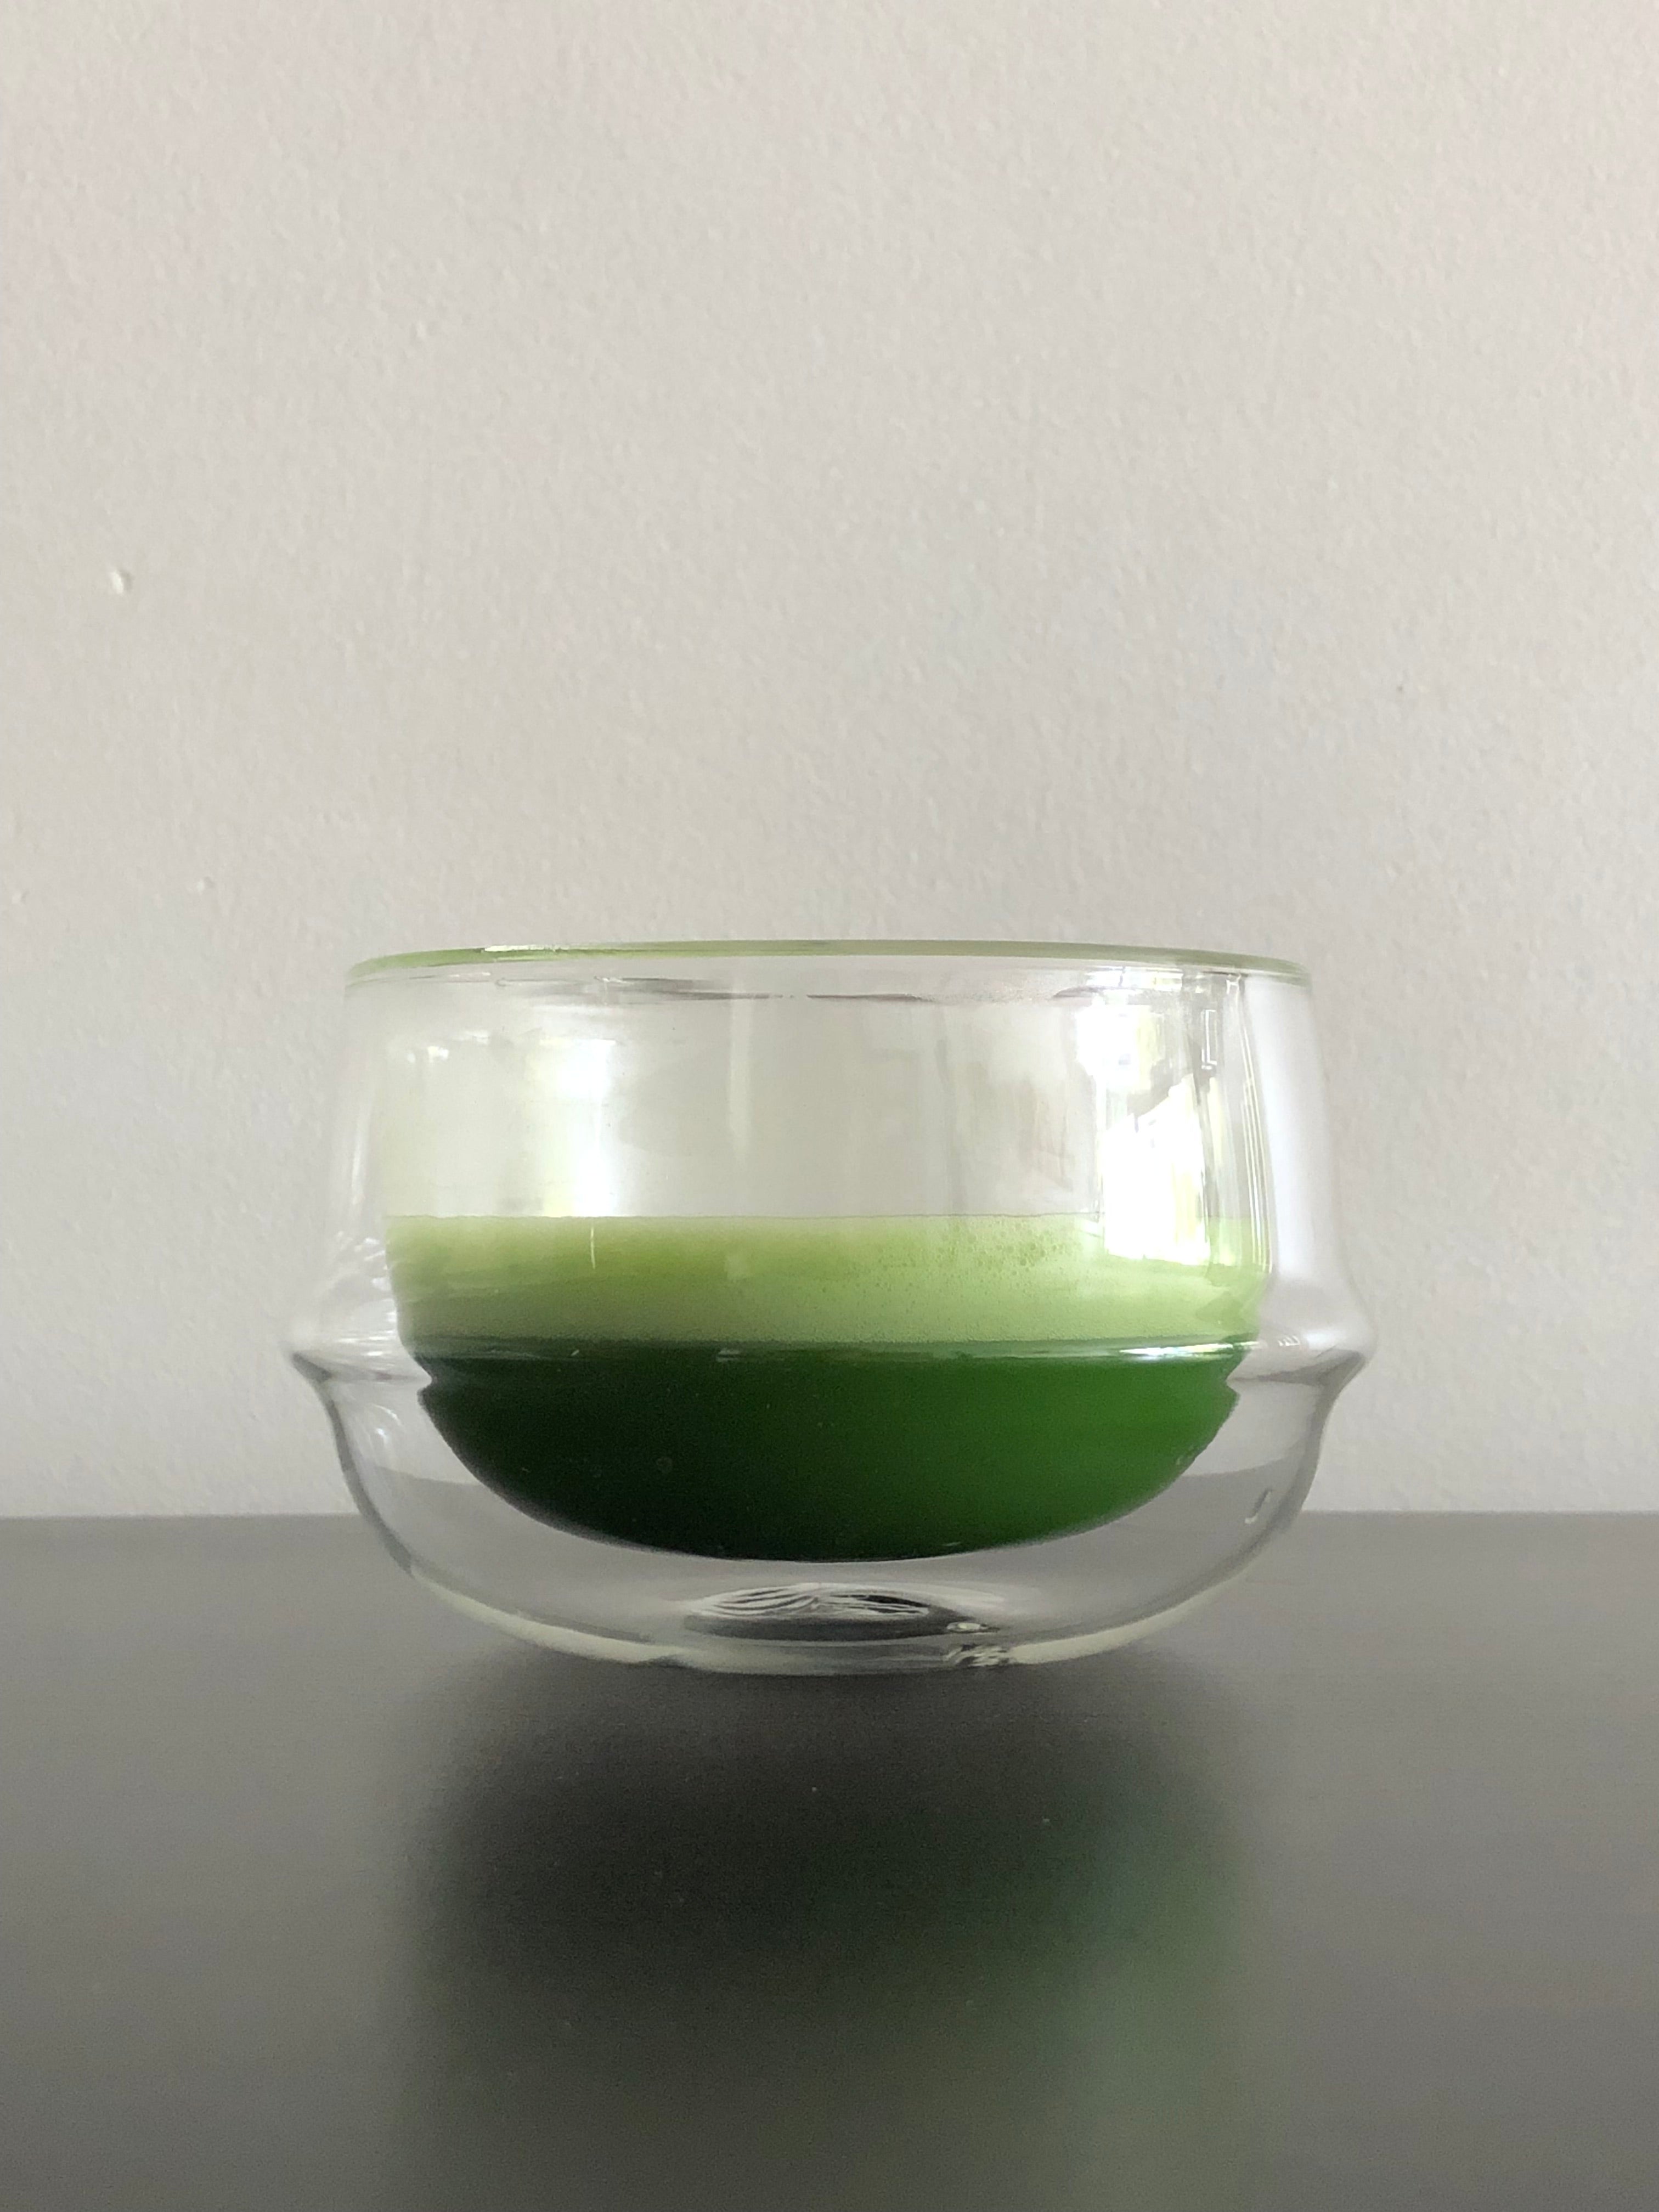 Himemidori ceremonial matcha green tea powder from Yabe Yame Fukuoka on chashaku sold by Sabo Tea Australia - Chiyonoen